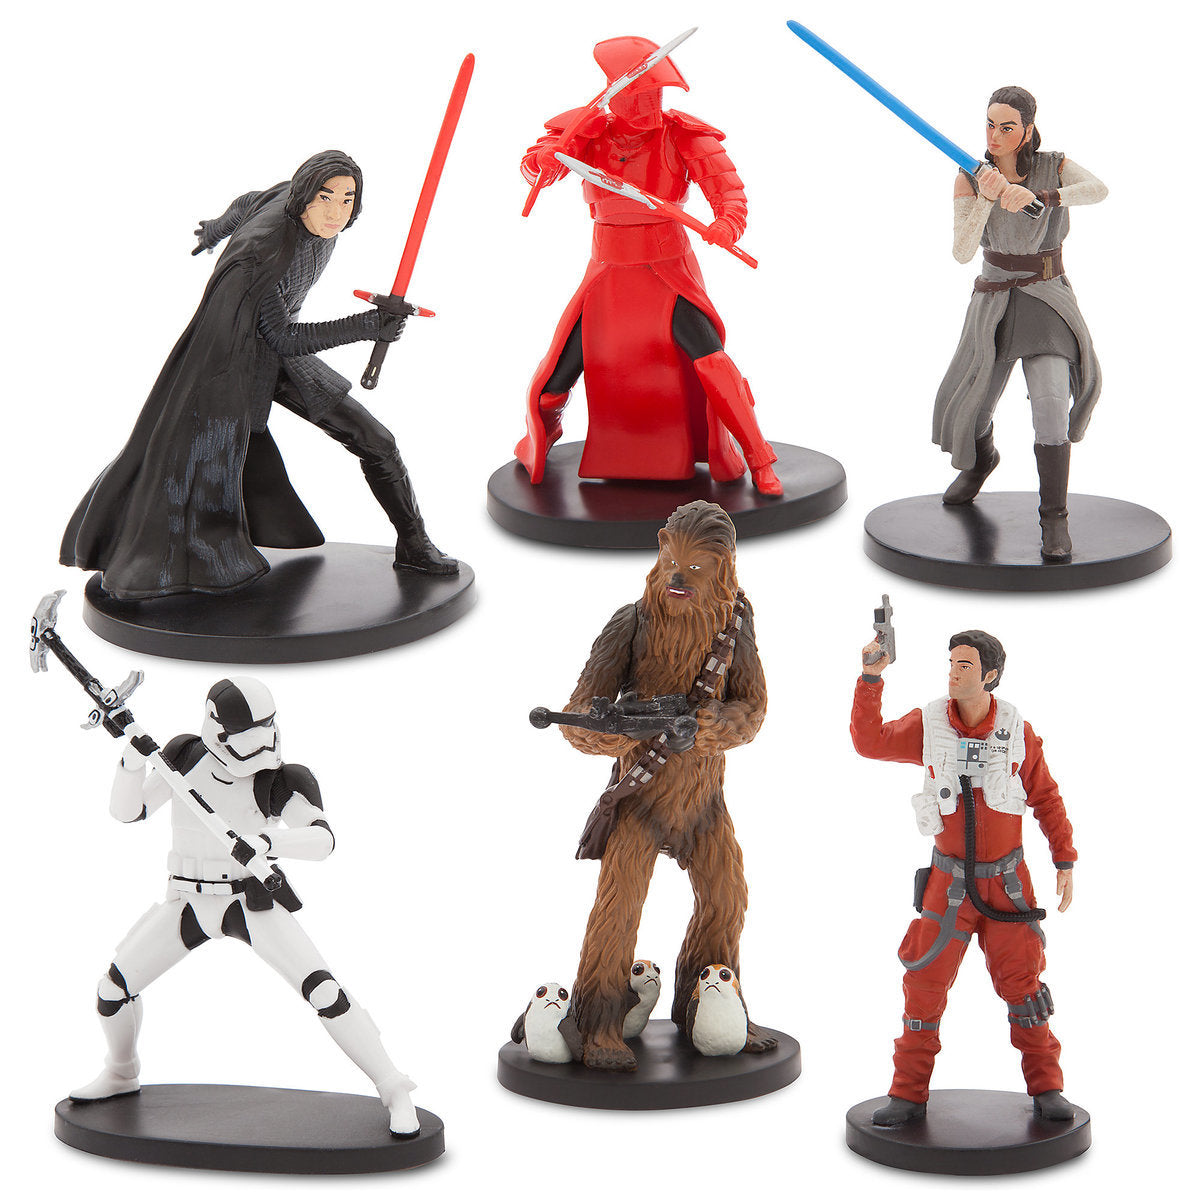 Disney Star Wars The Last Jedi Figure Play Set Cake Topper Playset 6 Pieces New